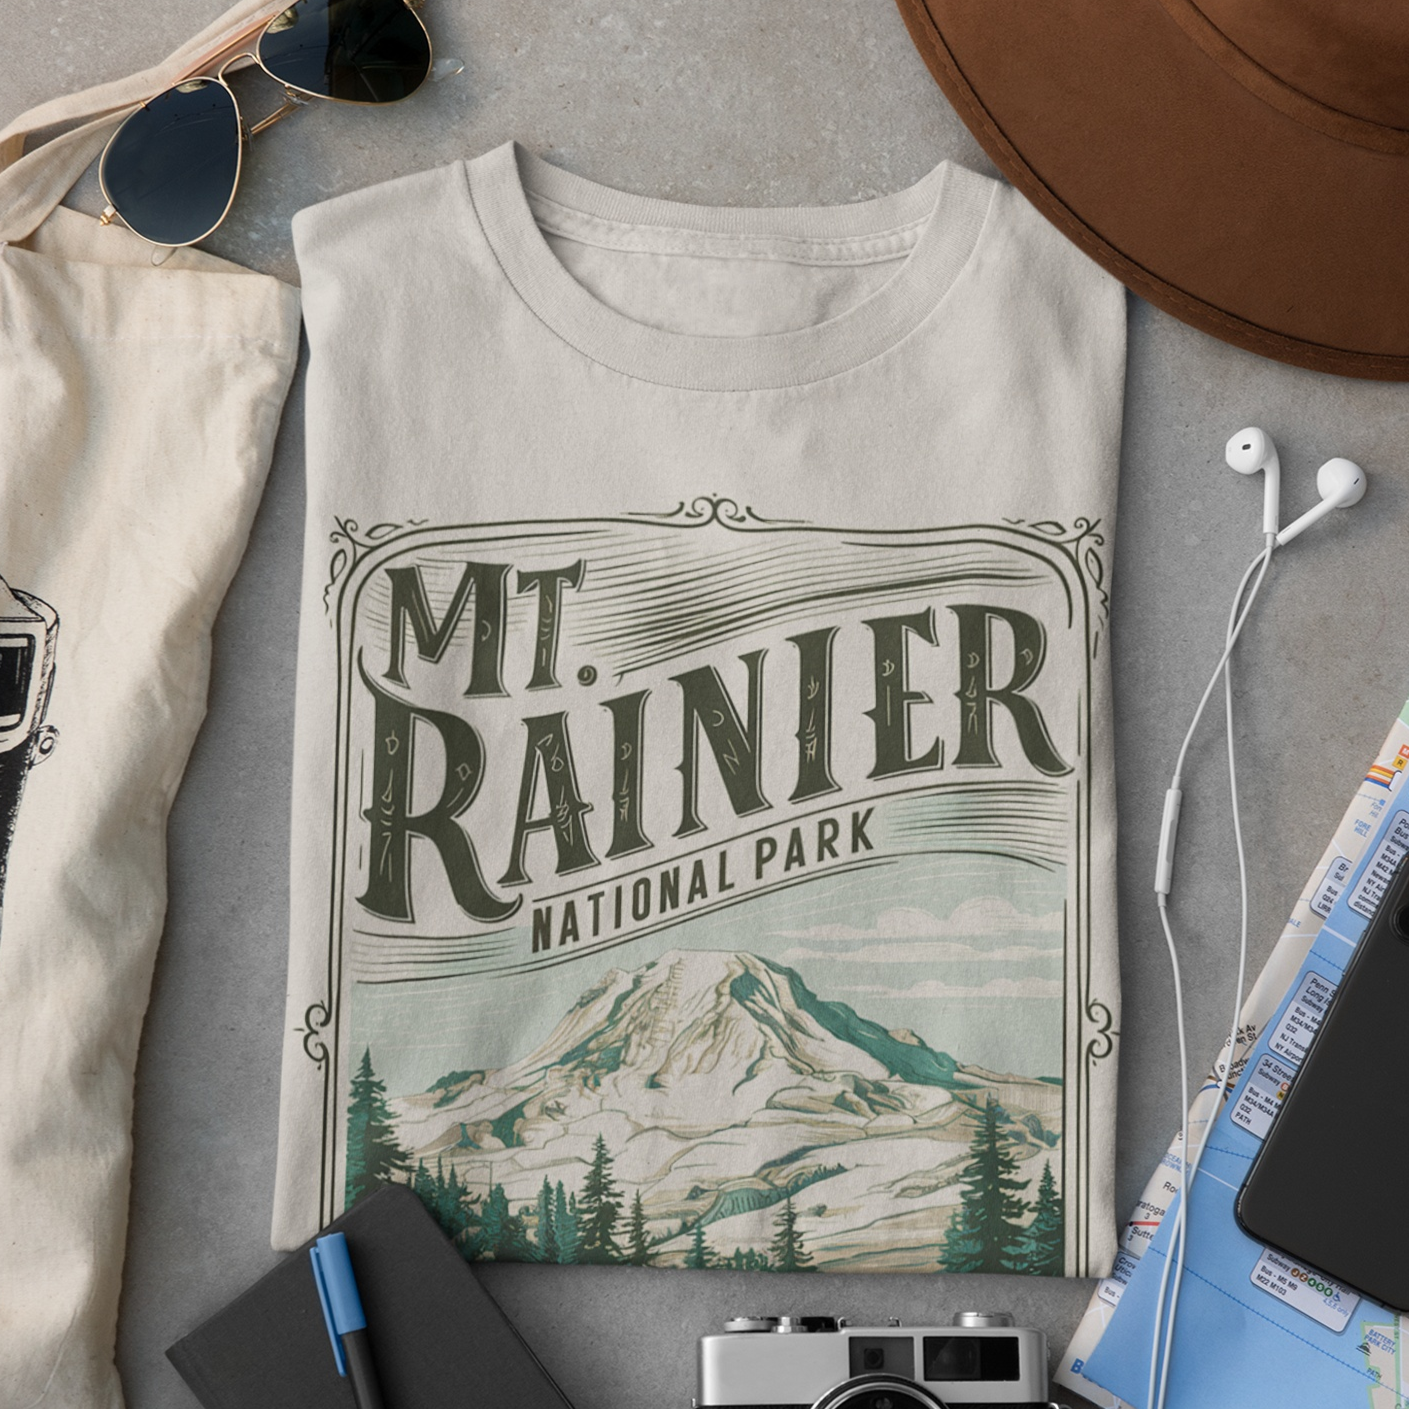 Mt. Rainier 1899 National Park Shirt